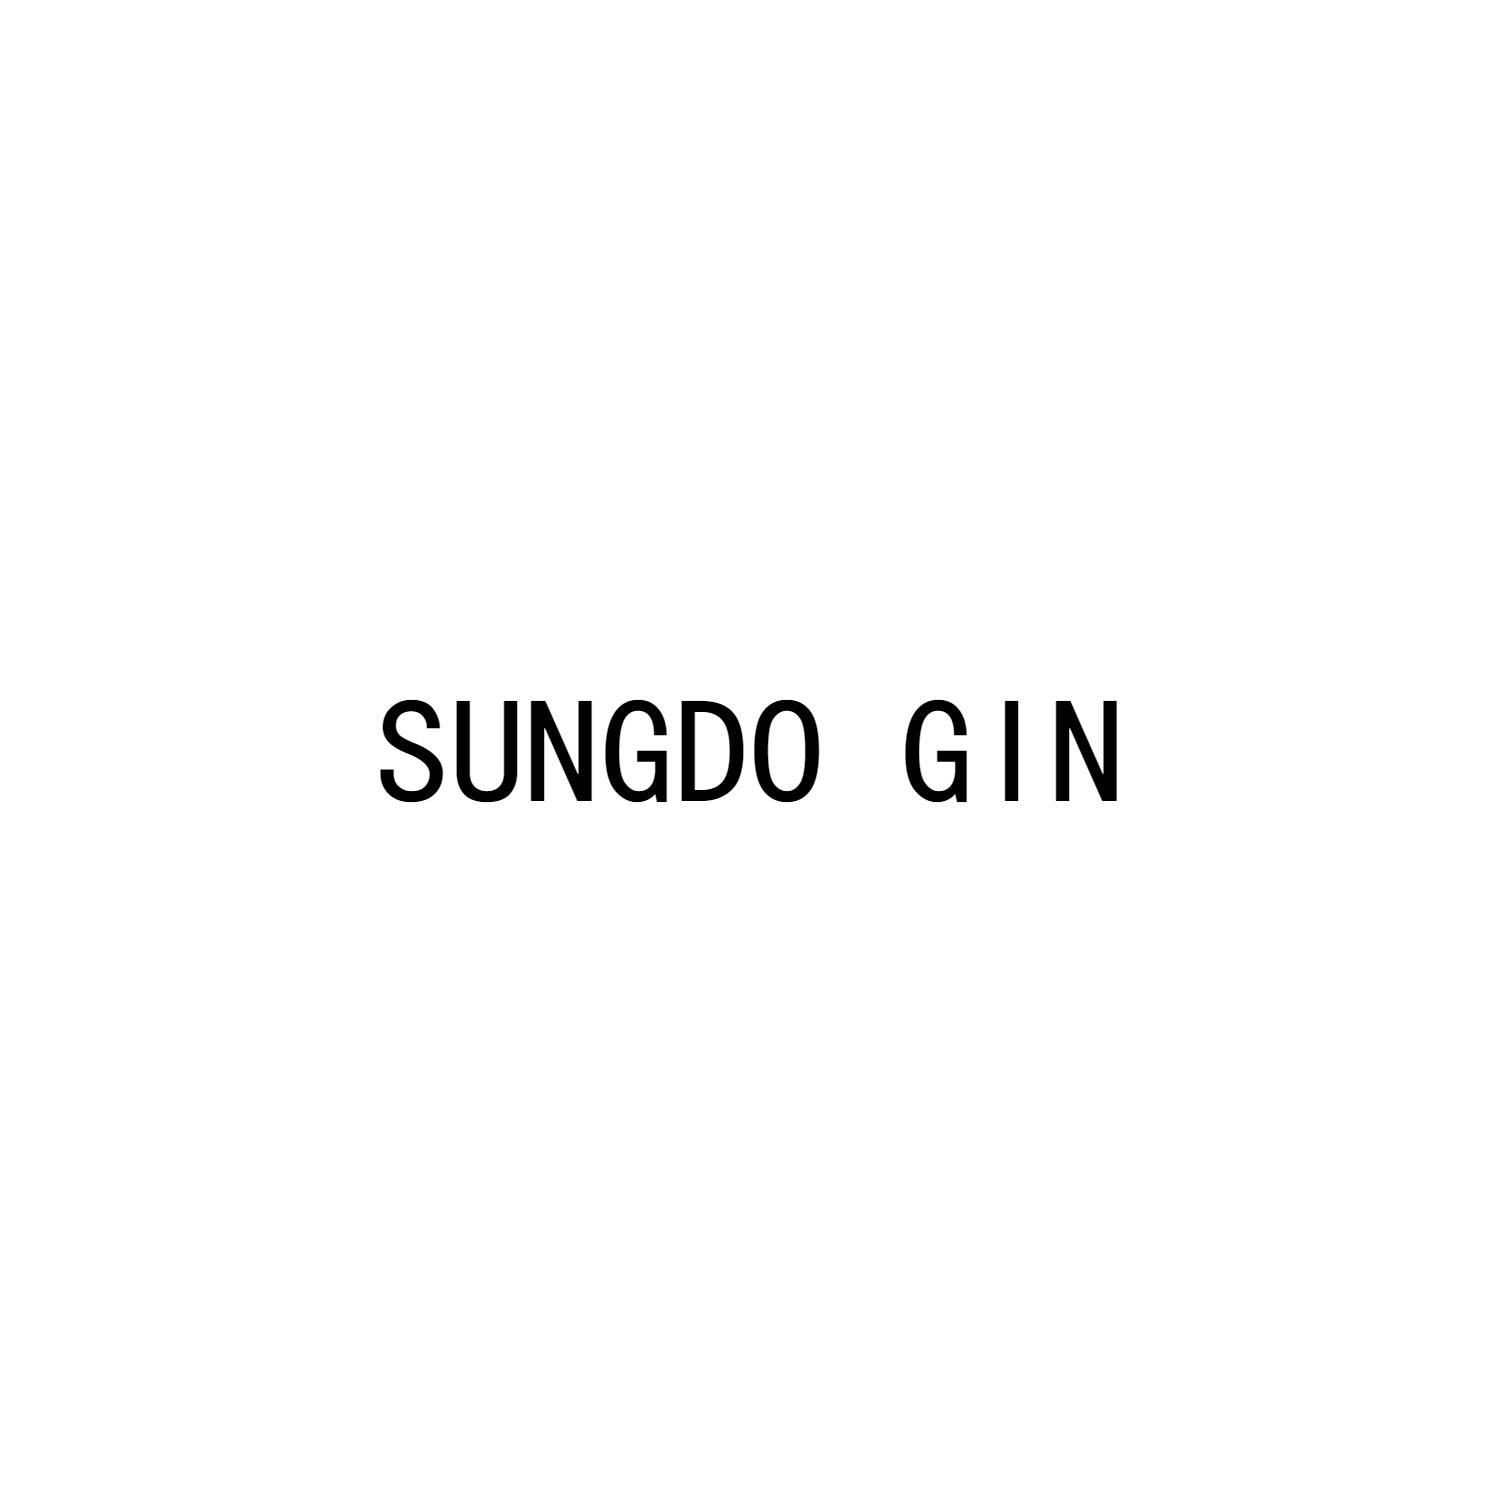 转让商标-SUNGDO GIN